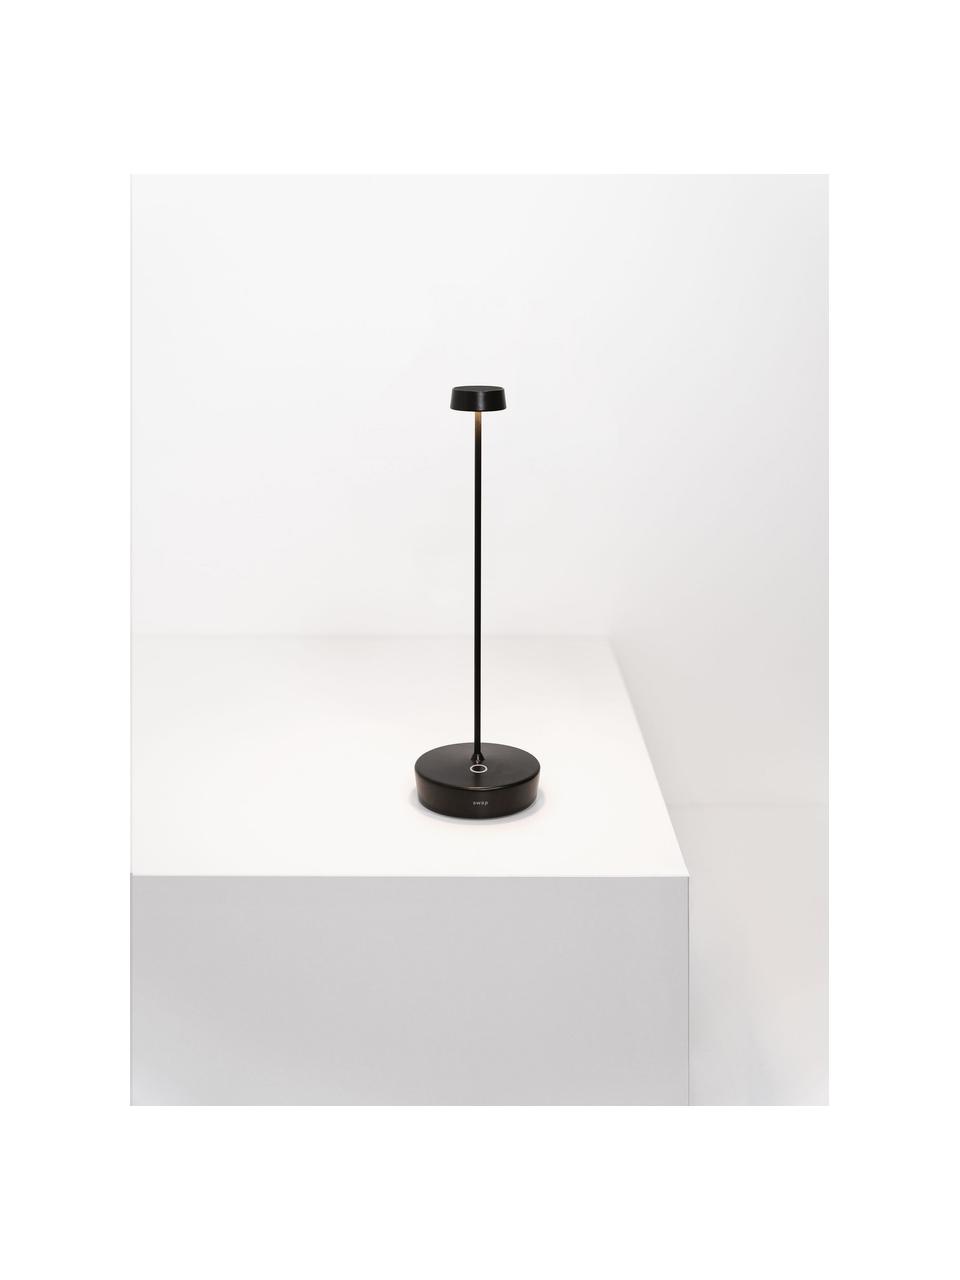 Kleine mobiele LED tafellamp Swap Mini, dimbaar, Lamp: aluminium, gecoat, Zwart, Ø 10 x H 29 cm